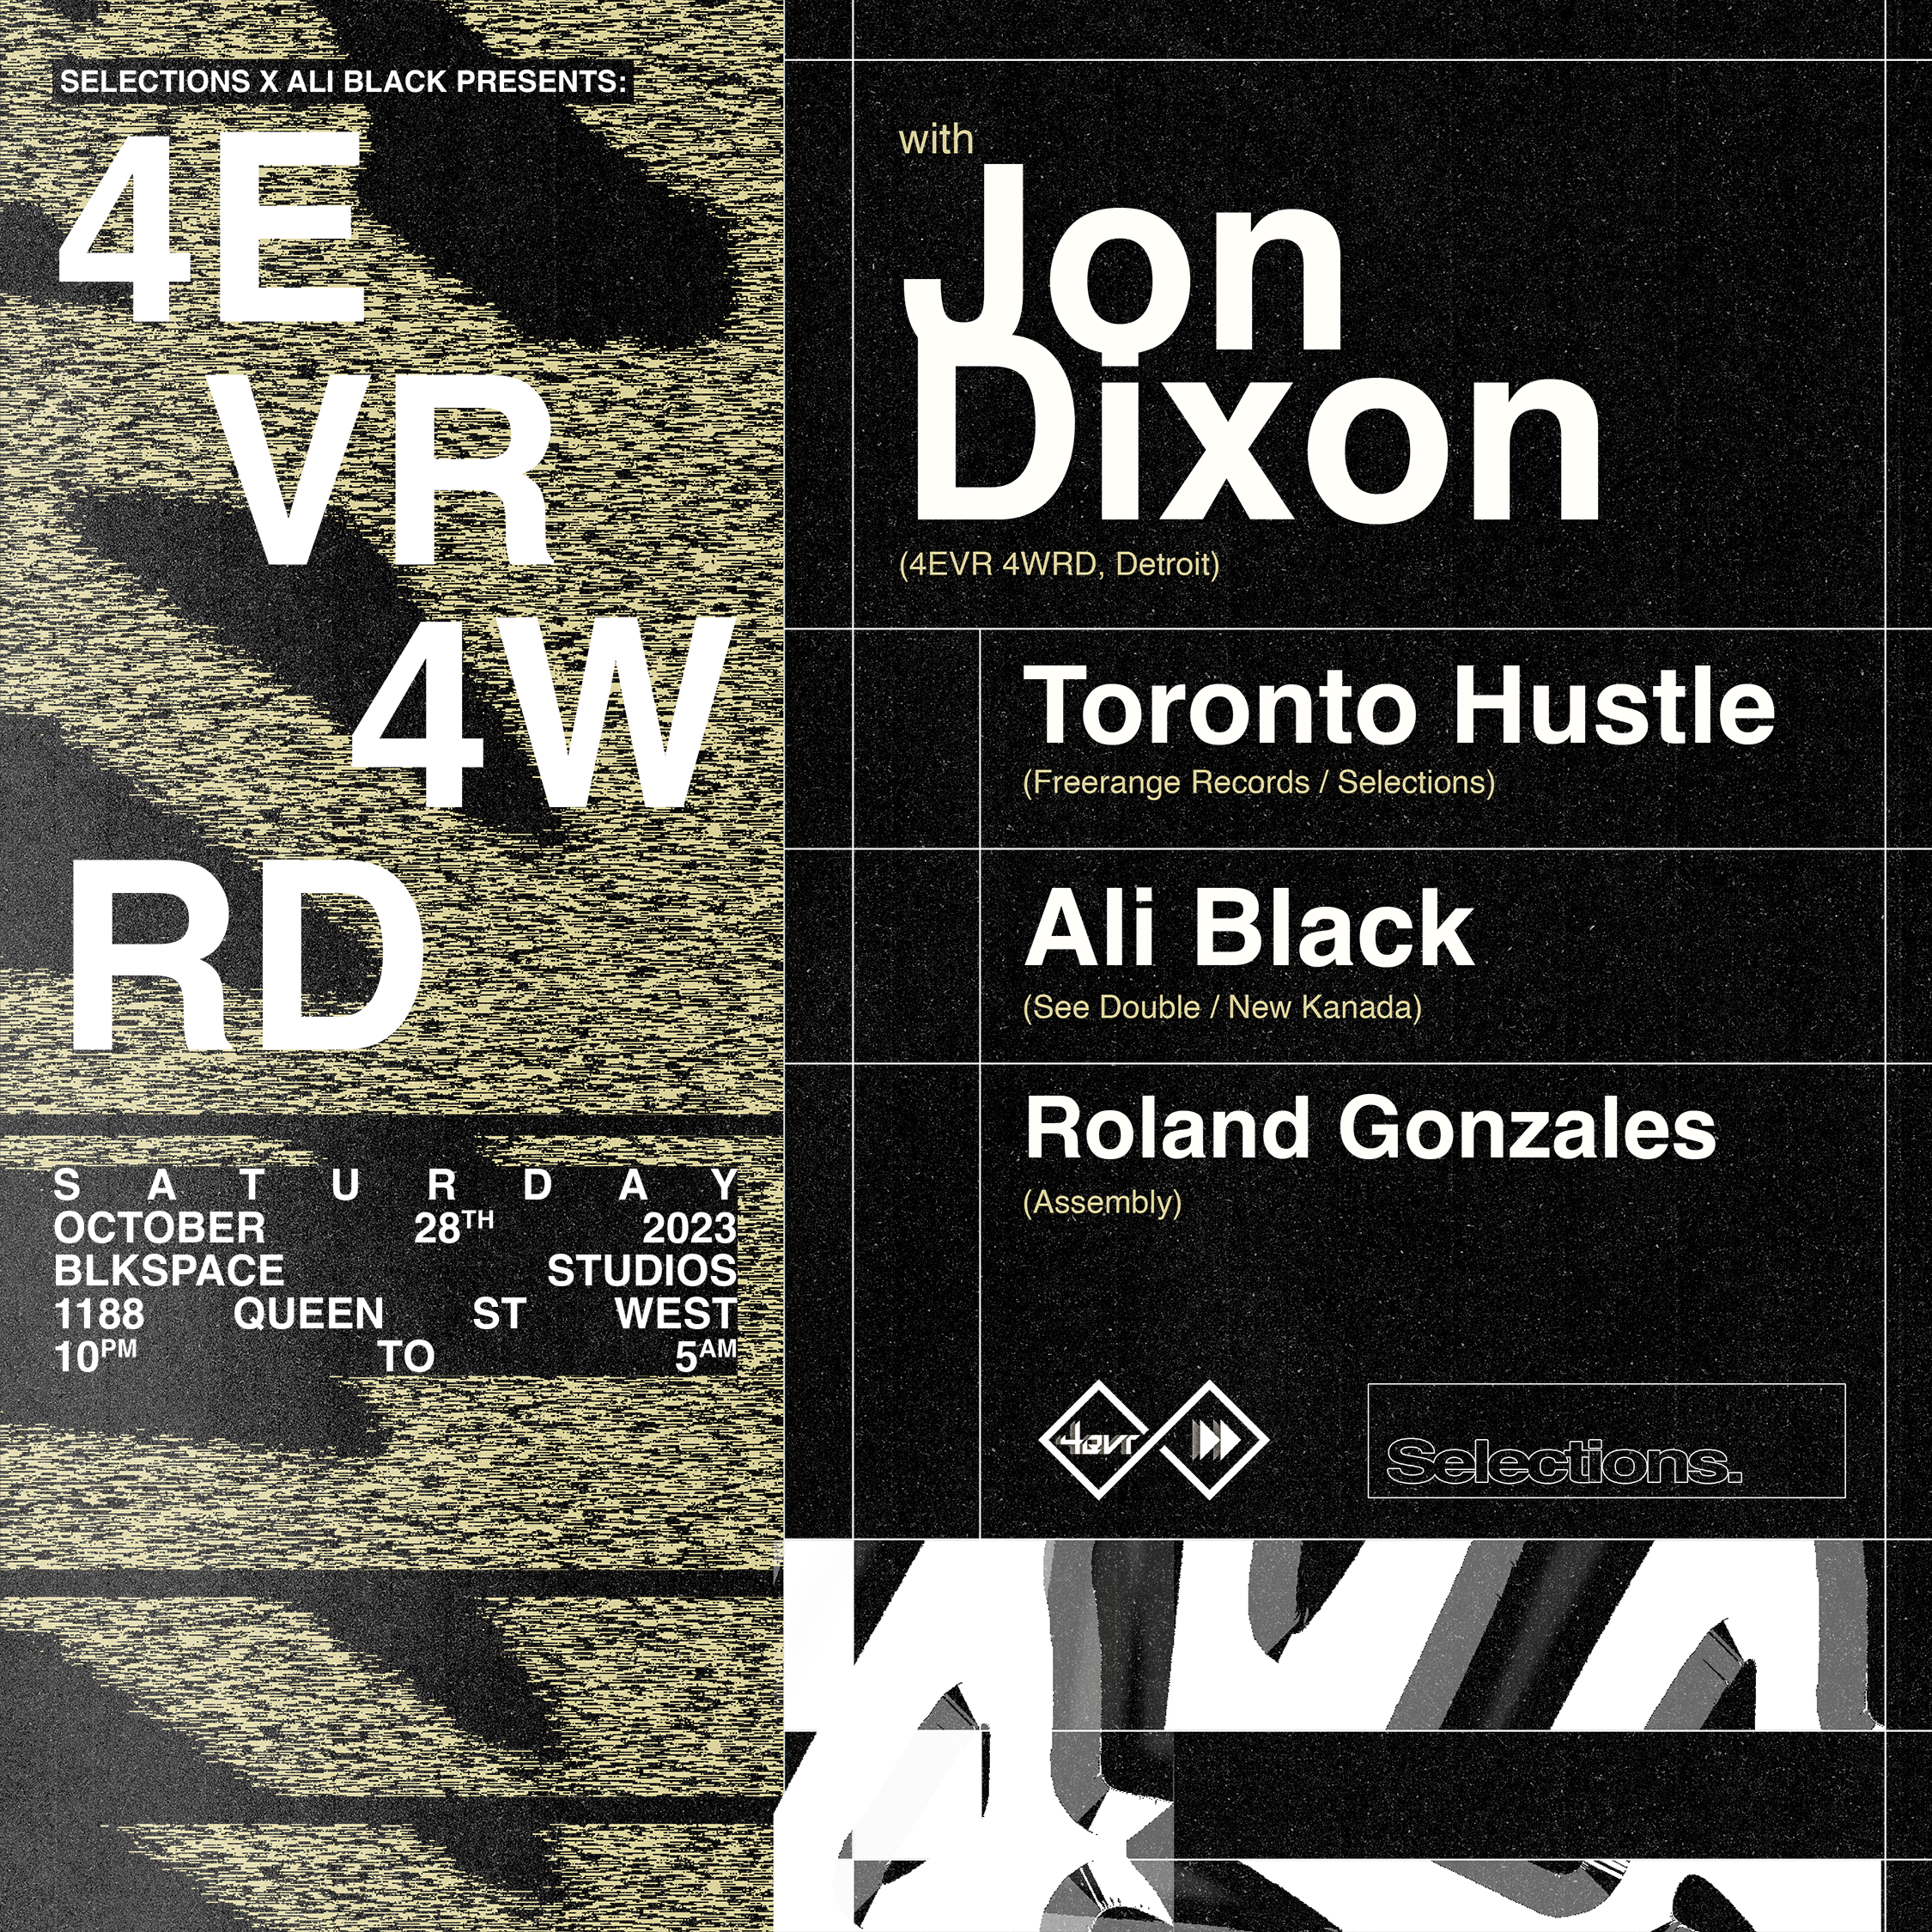 Selections x Ali Black Pres. 4evr 4wrd with Jon Dixon (Detroit) - フライヤー表